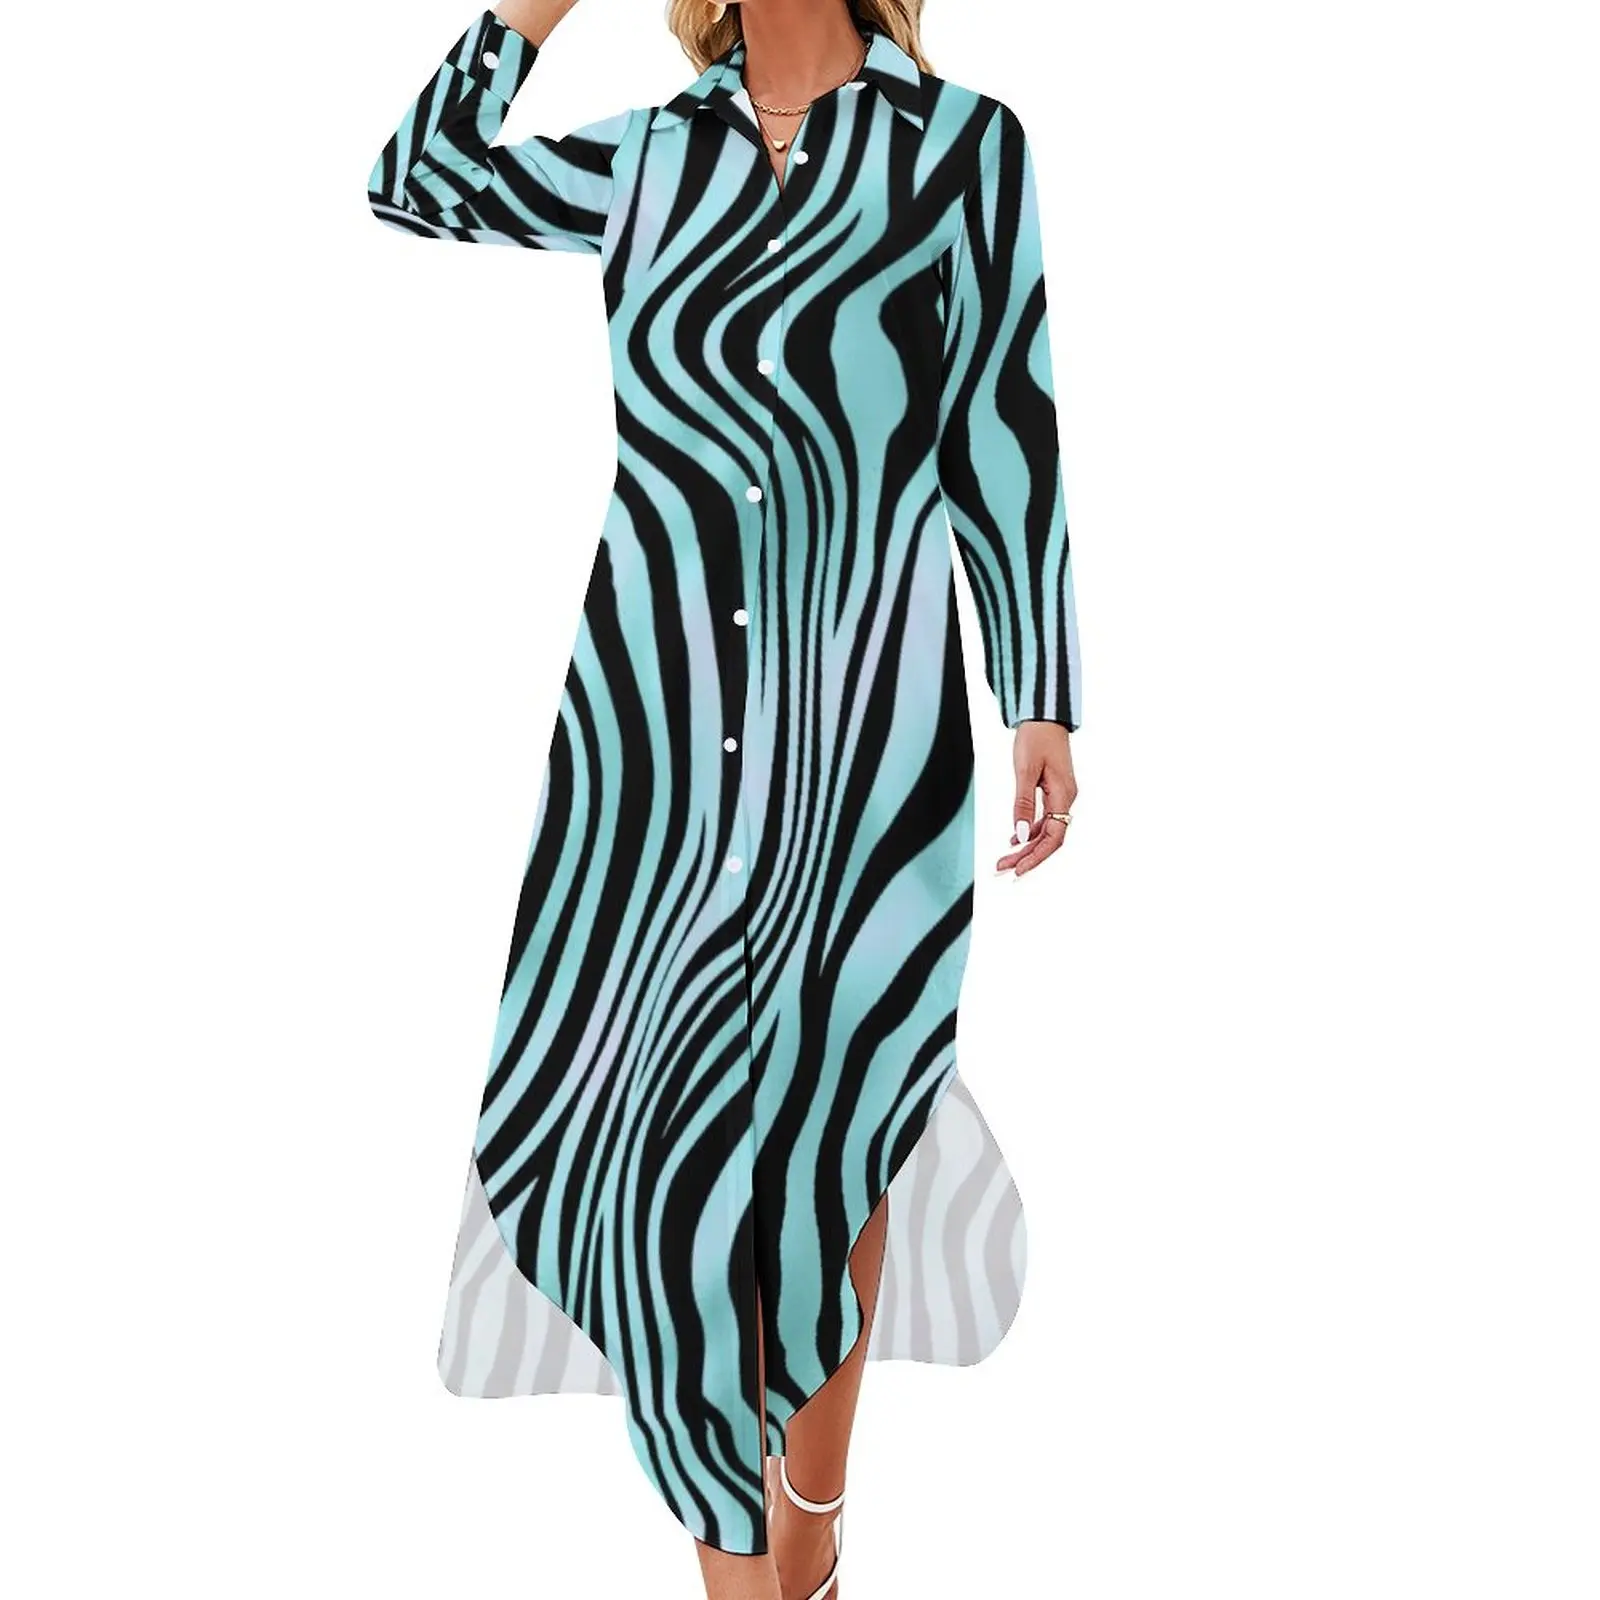 

Zebra Stripe Turquoise Teal Casual Dress Animal Print Street Wear Dresses Long Sleeve Elegant Lady V Neck Oversize Chiffon Dress